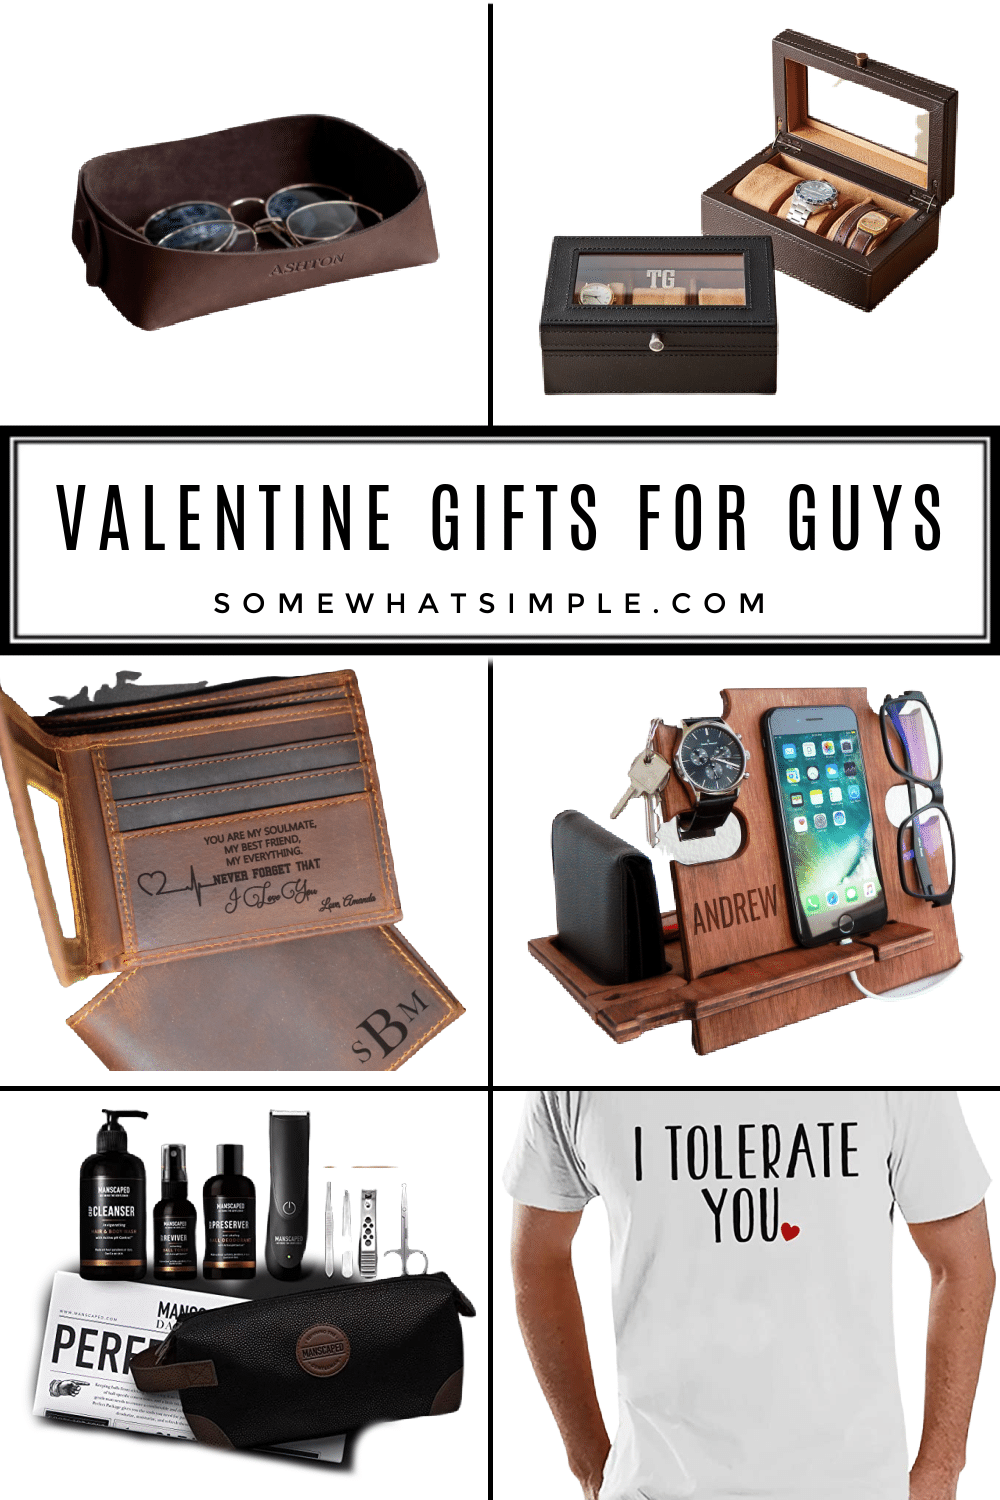 50 Best Sentimental Gifts For Men